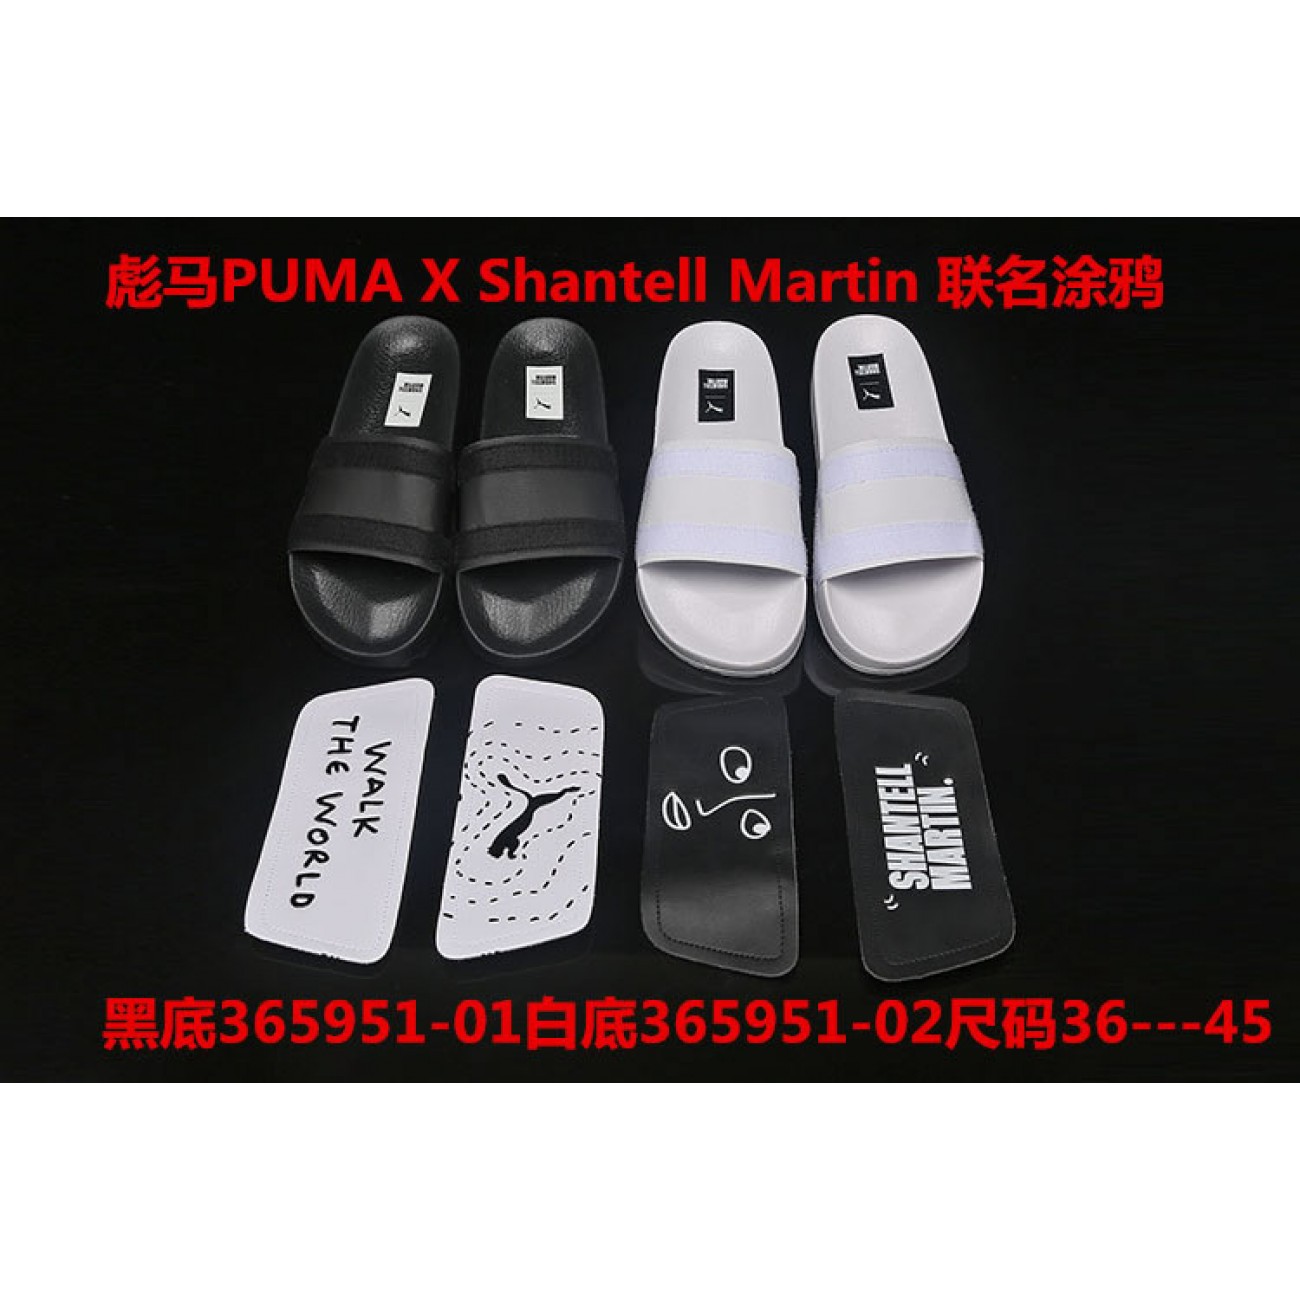 Puma x Shantell Martin Sandals Slippers 365951-02